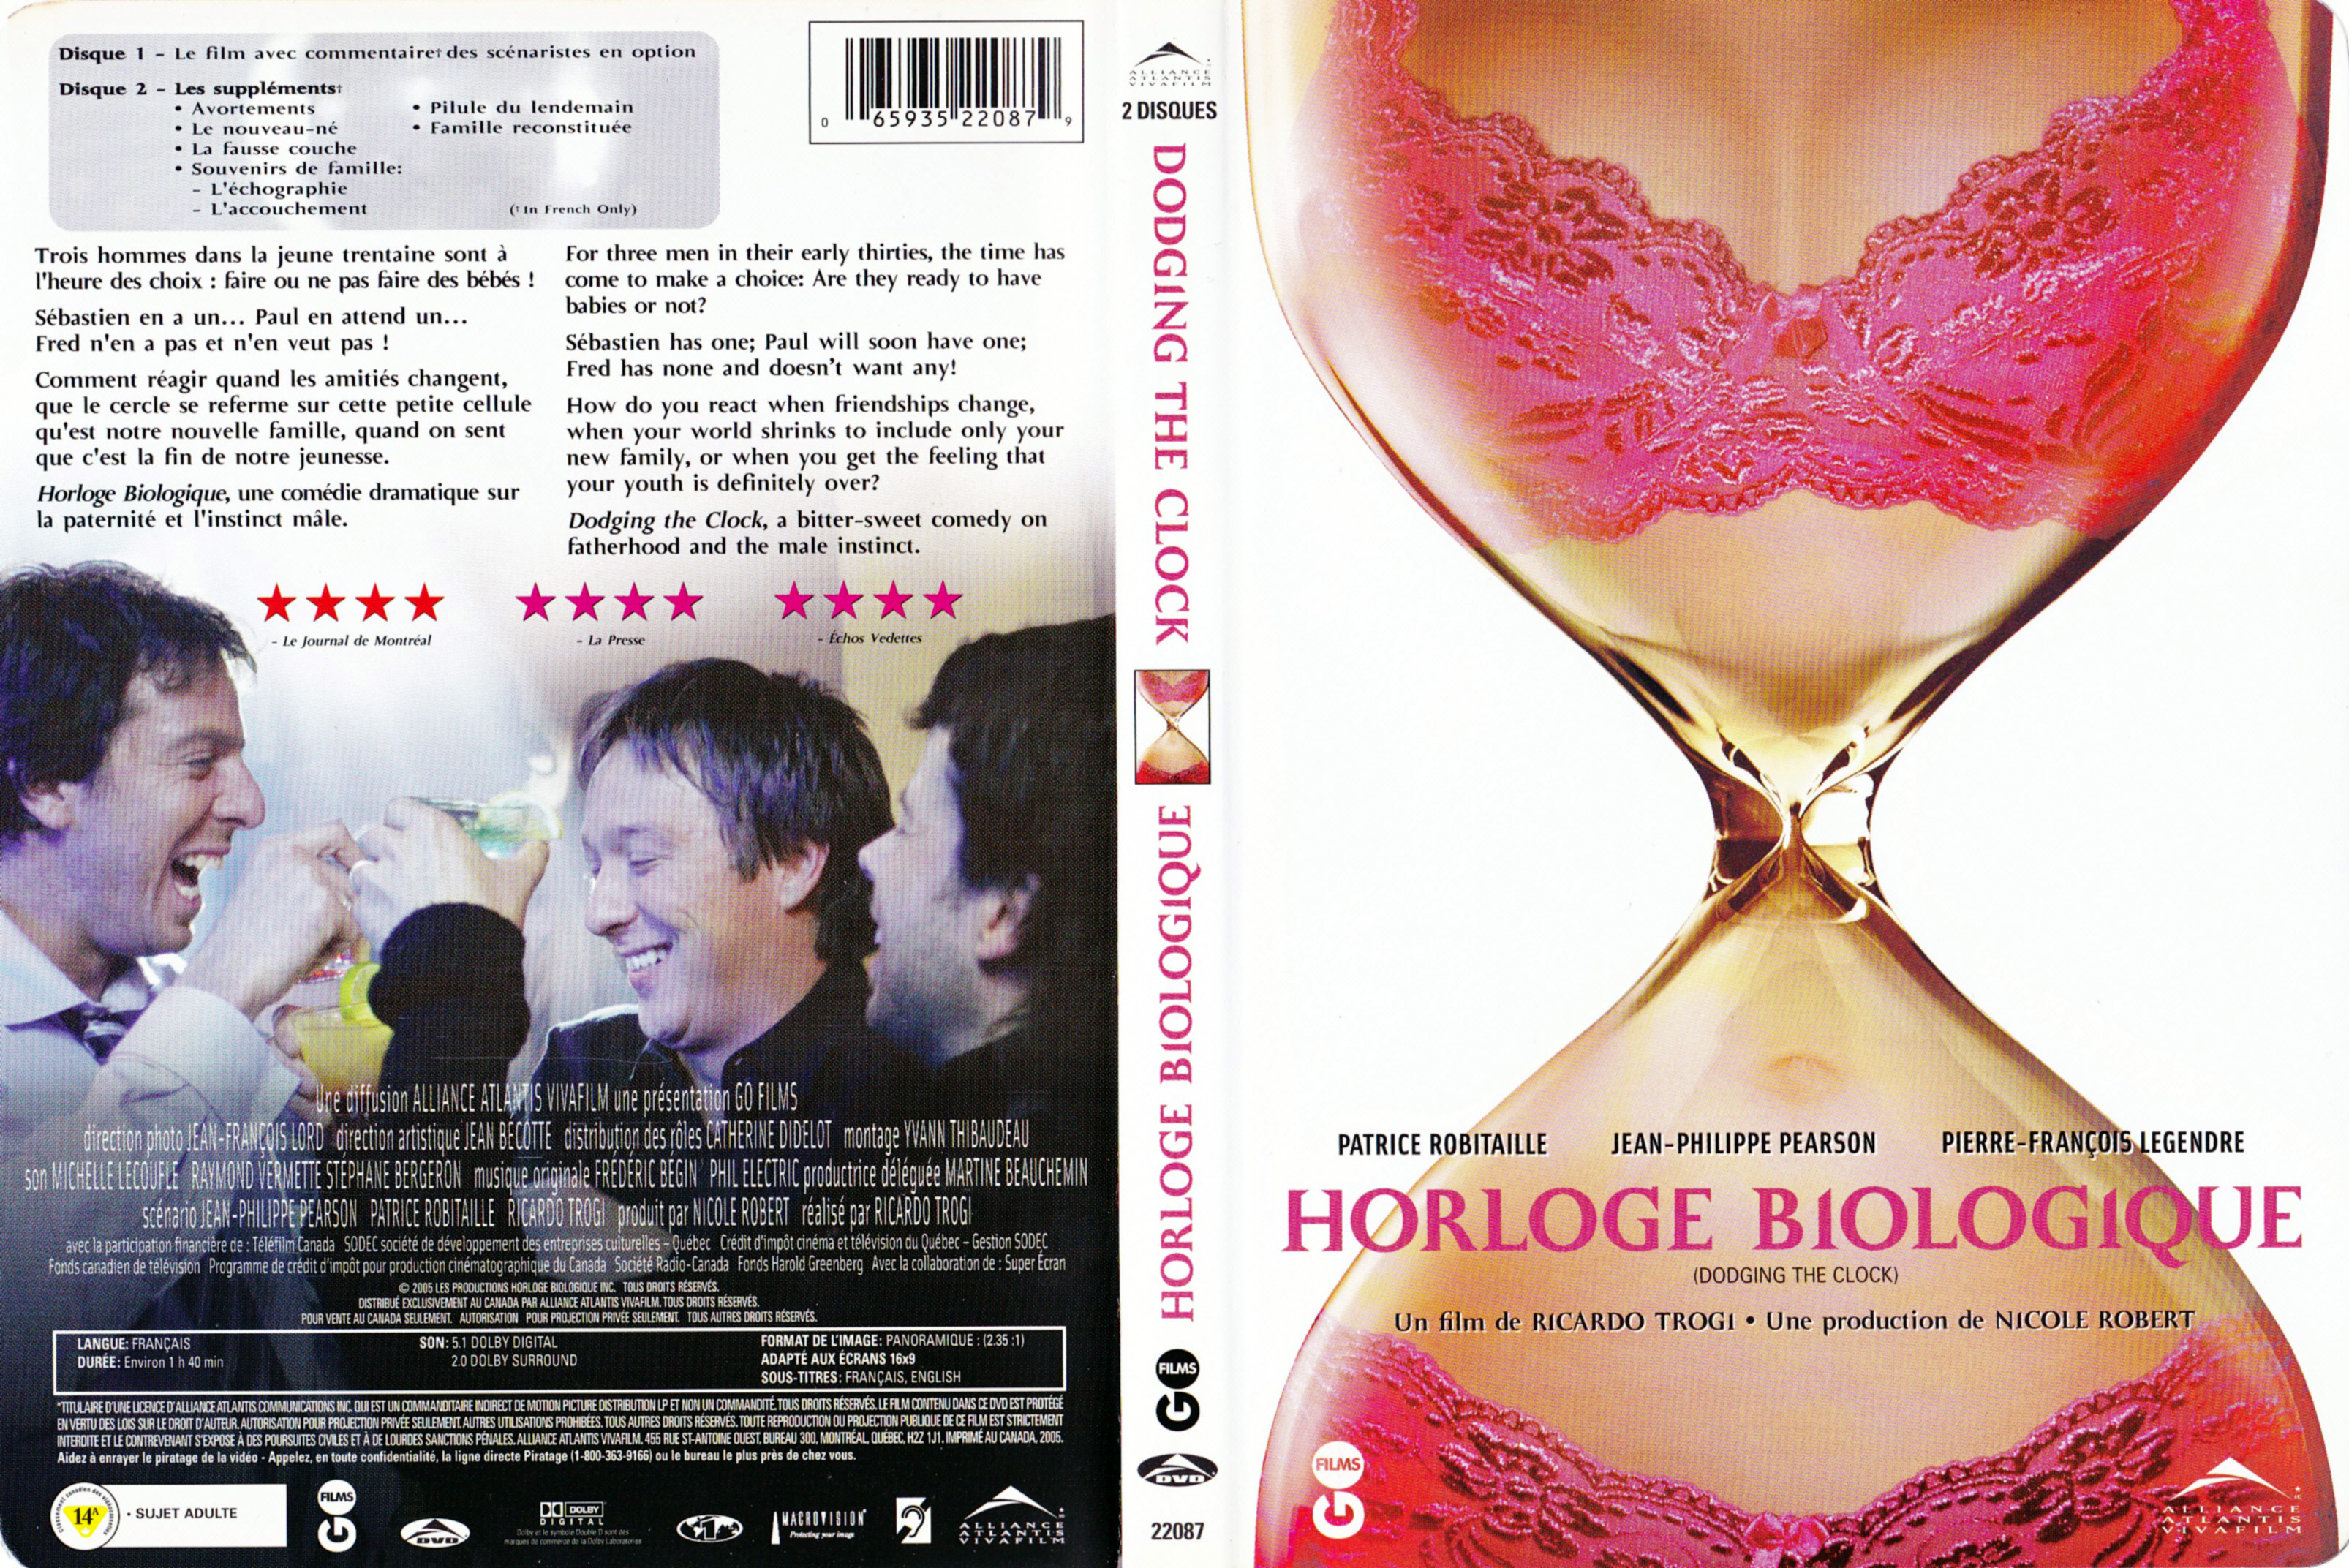 Jaquette DVD Horloge biologique - Dodging the clock (Canadienne)